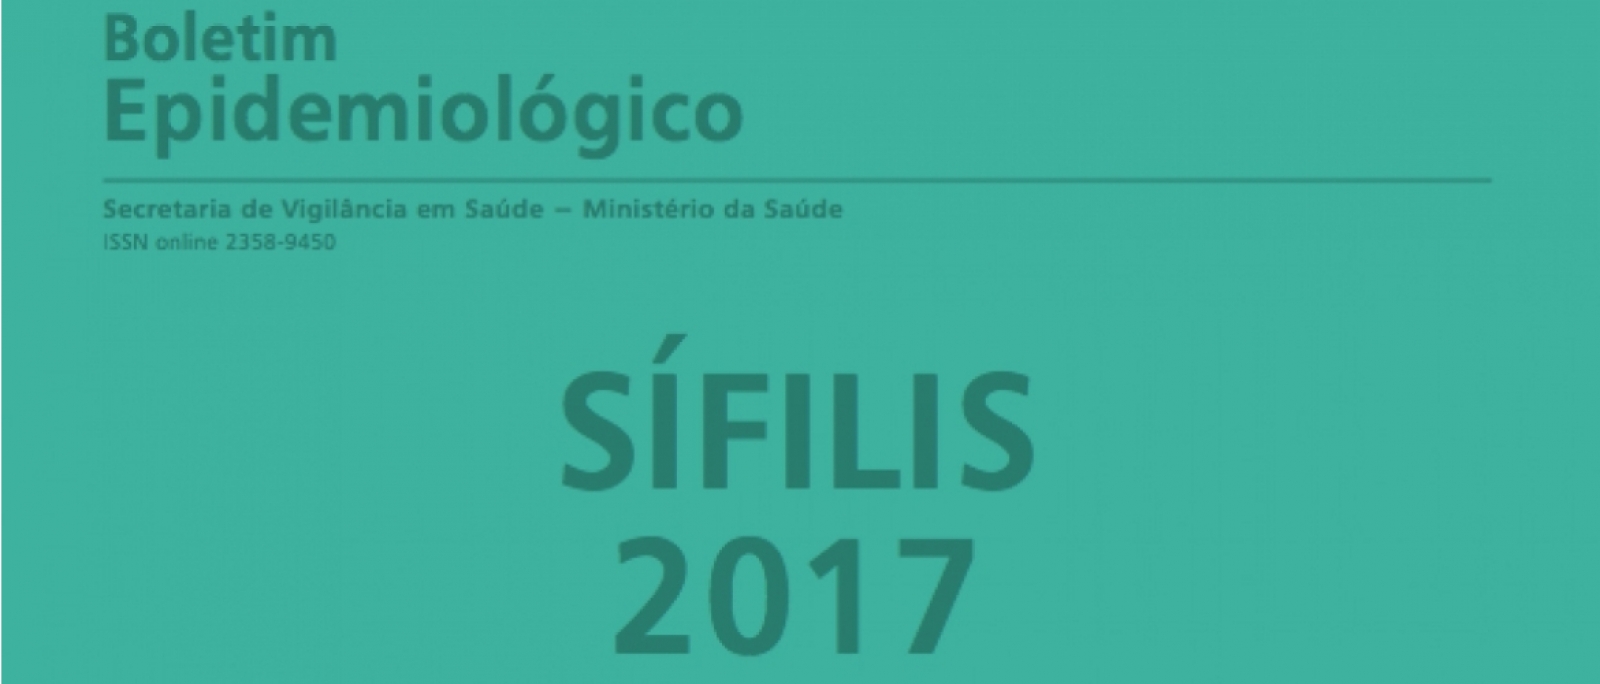 Boletim Epidemiologico De Sifilis De 2017